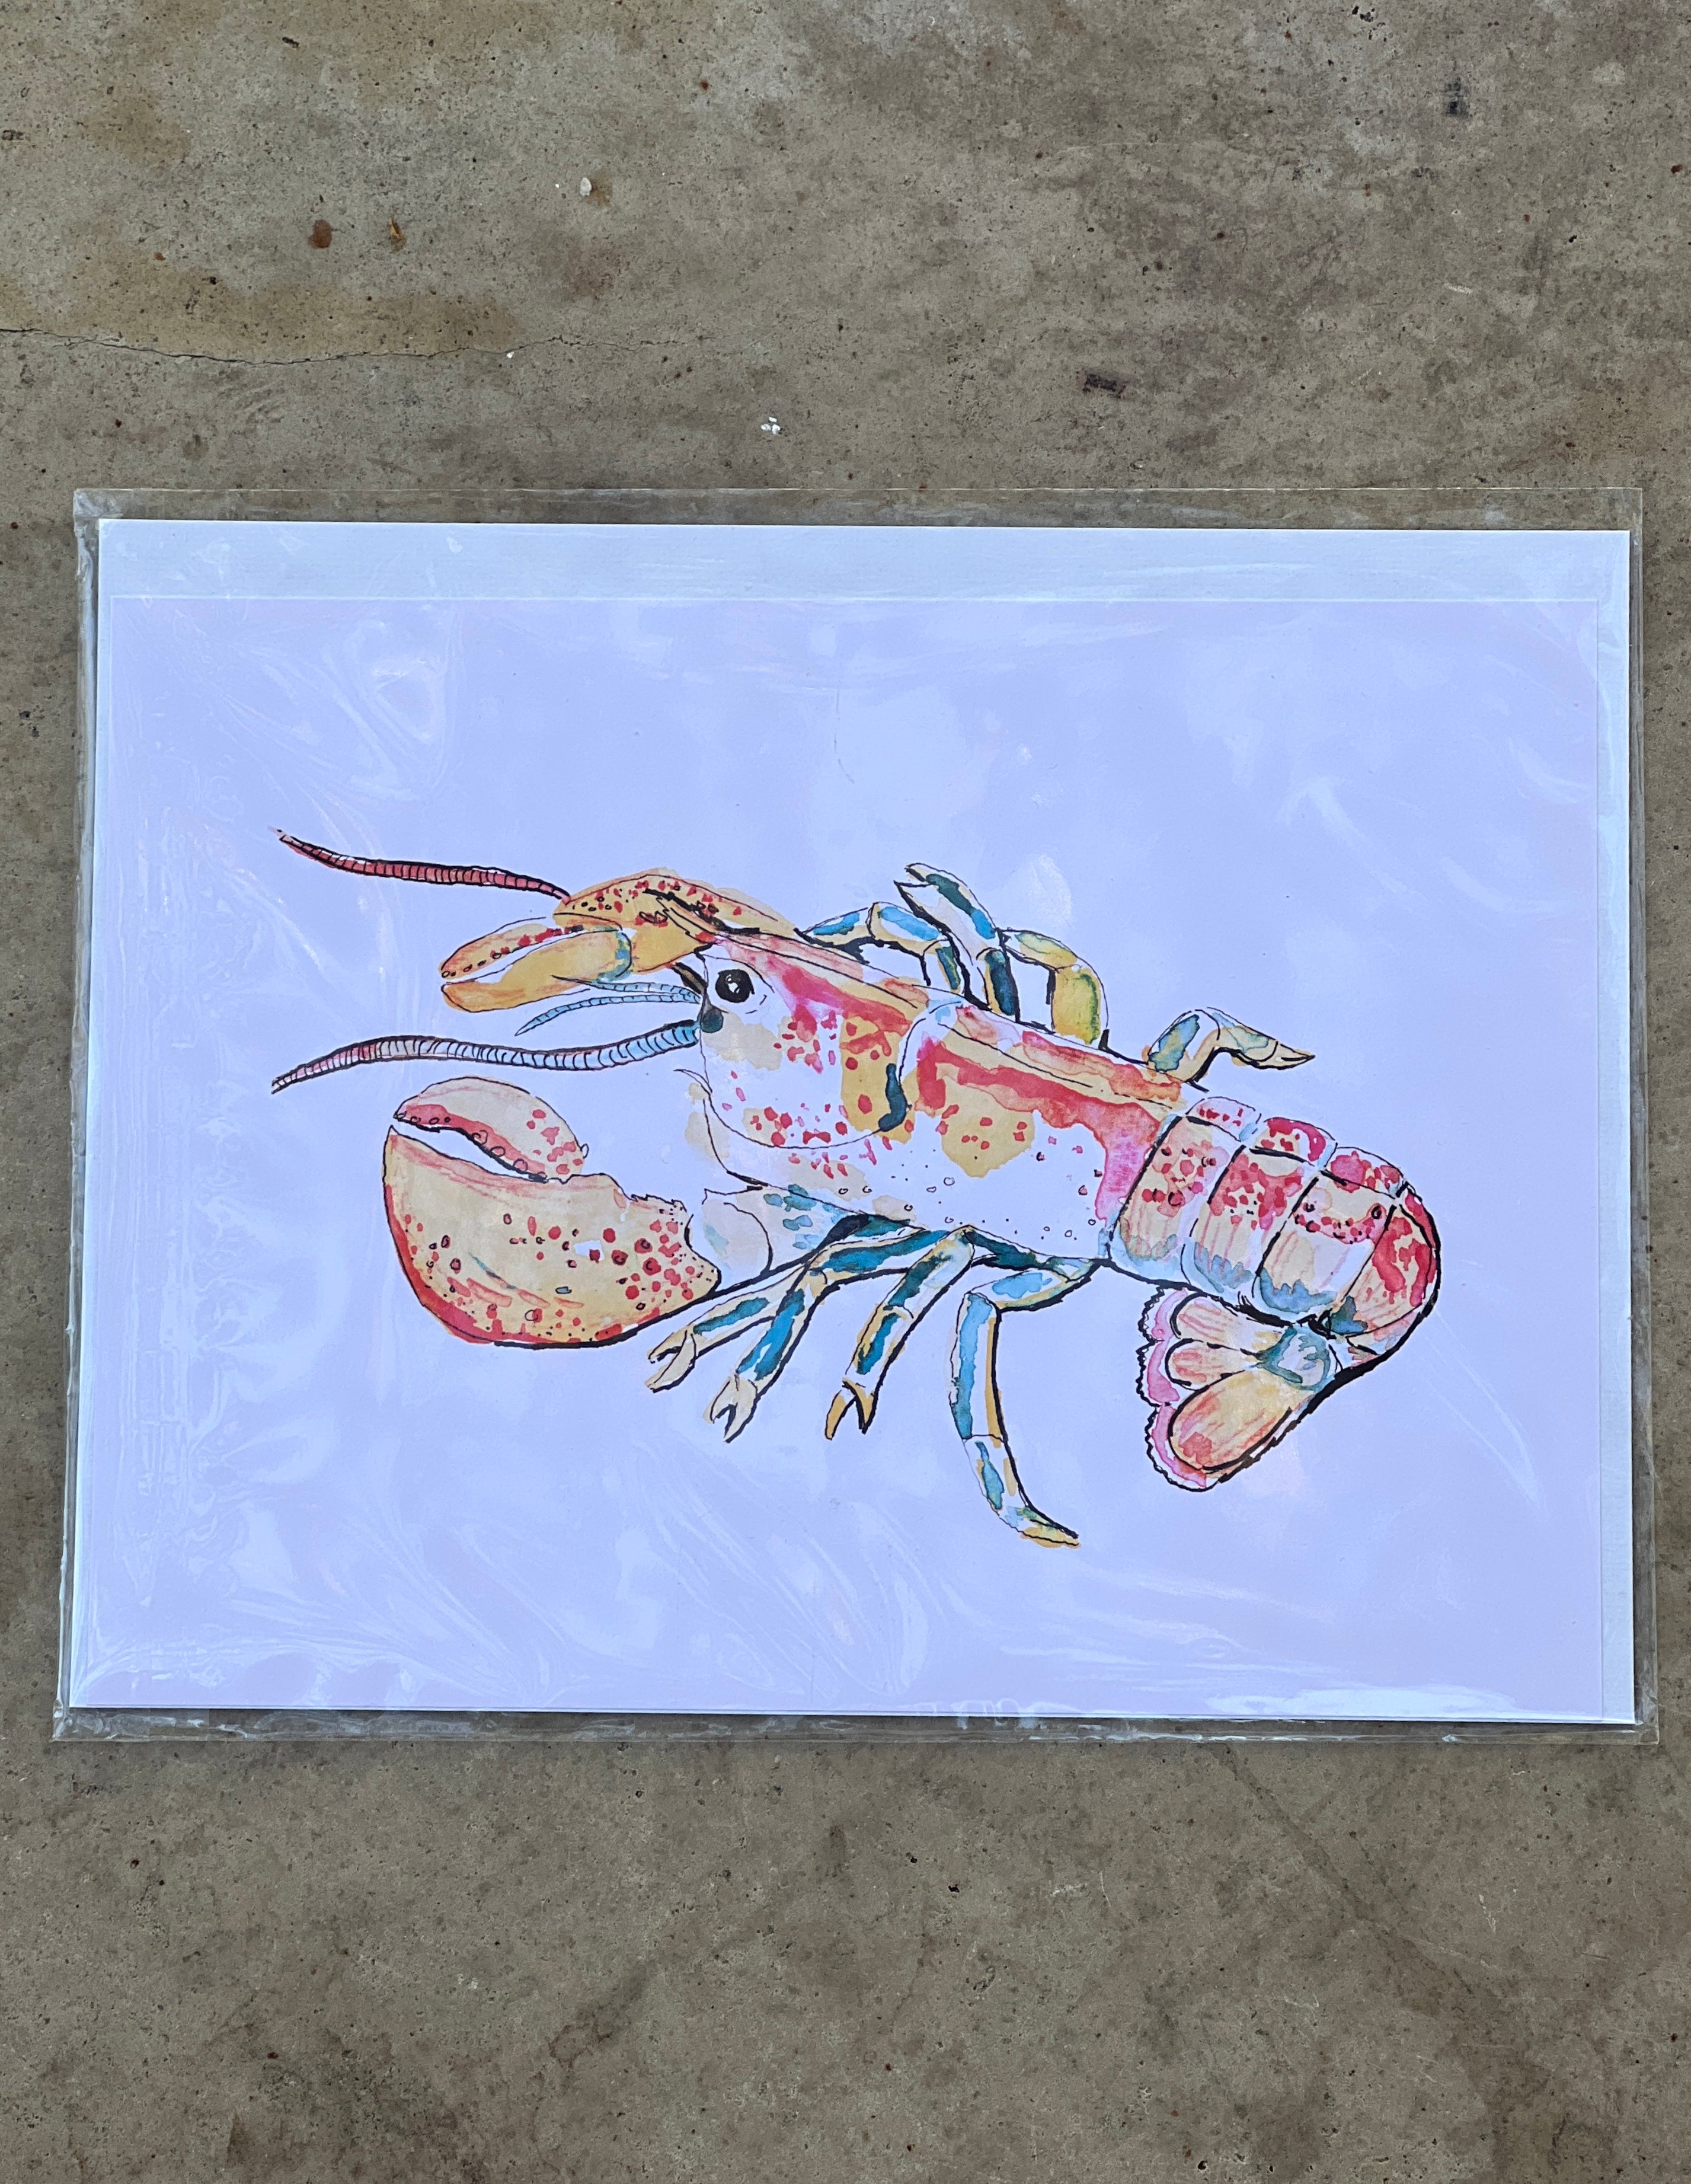 Refuge Studios Iowa City - Lobster Study Giclée Print